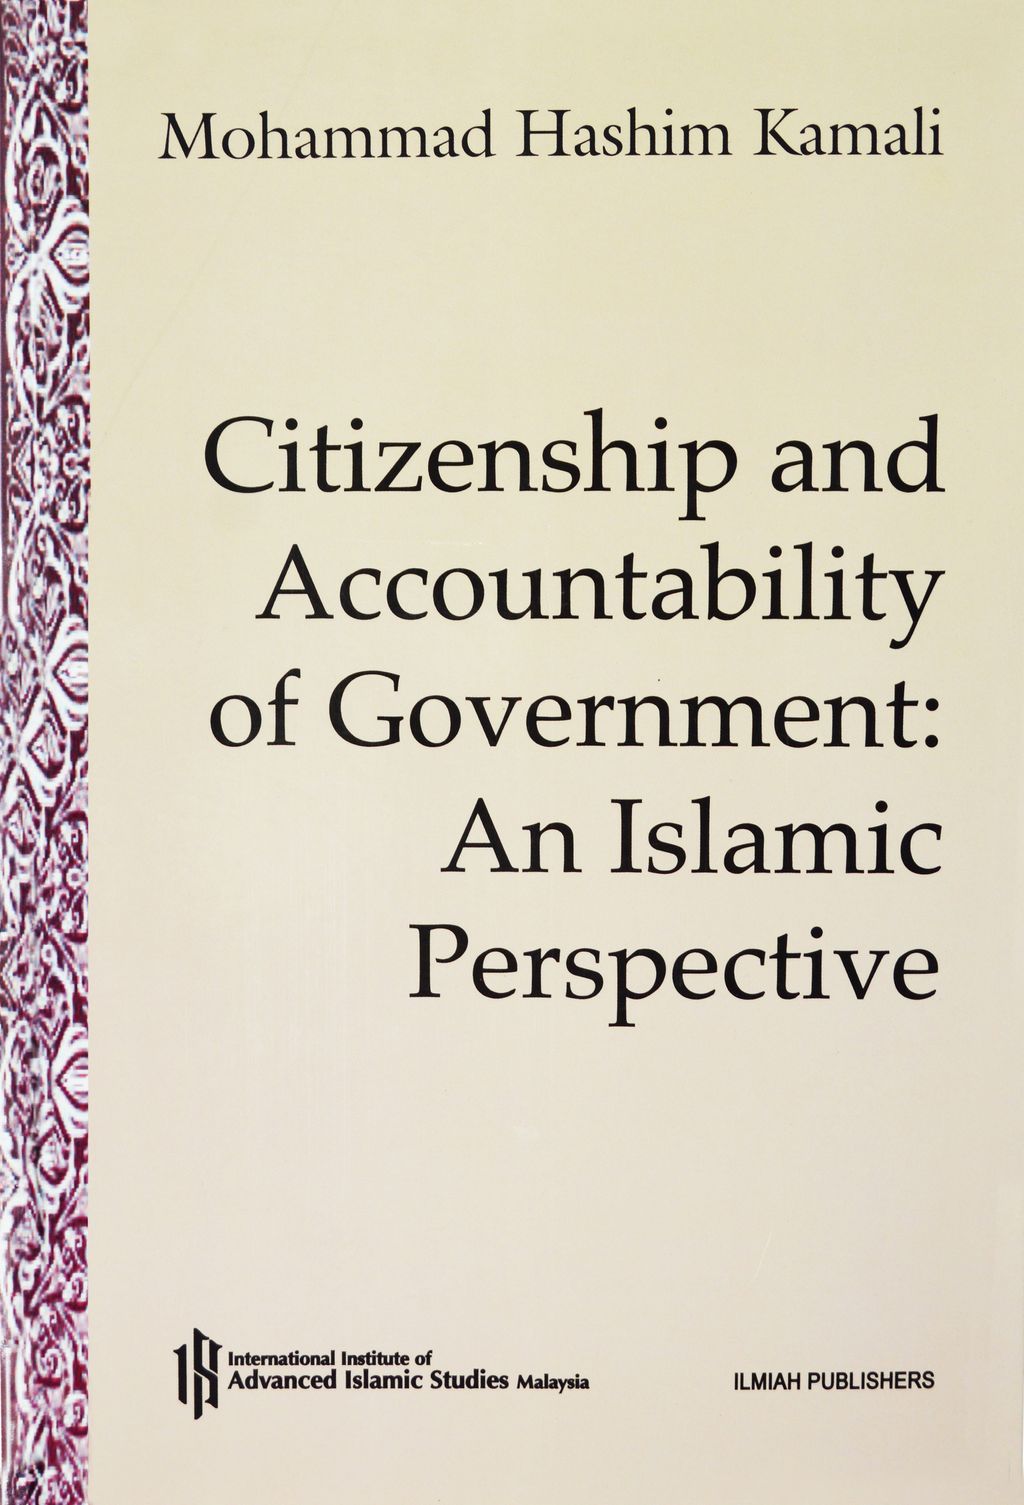 Citizenship and Accountability.jpg